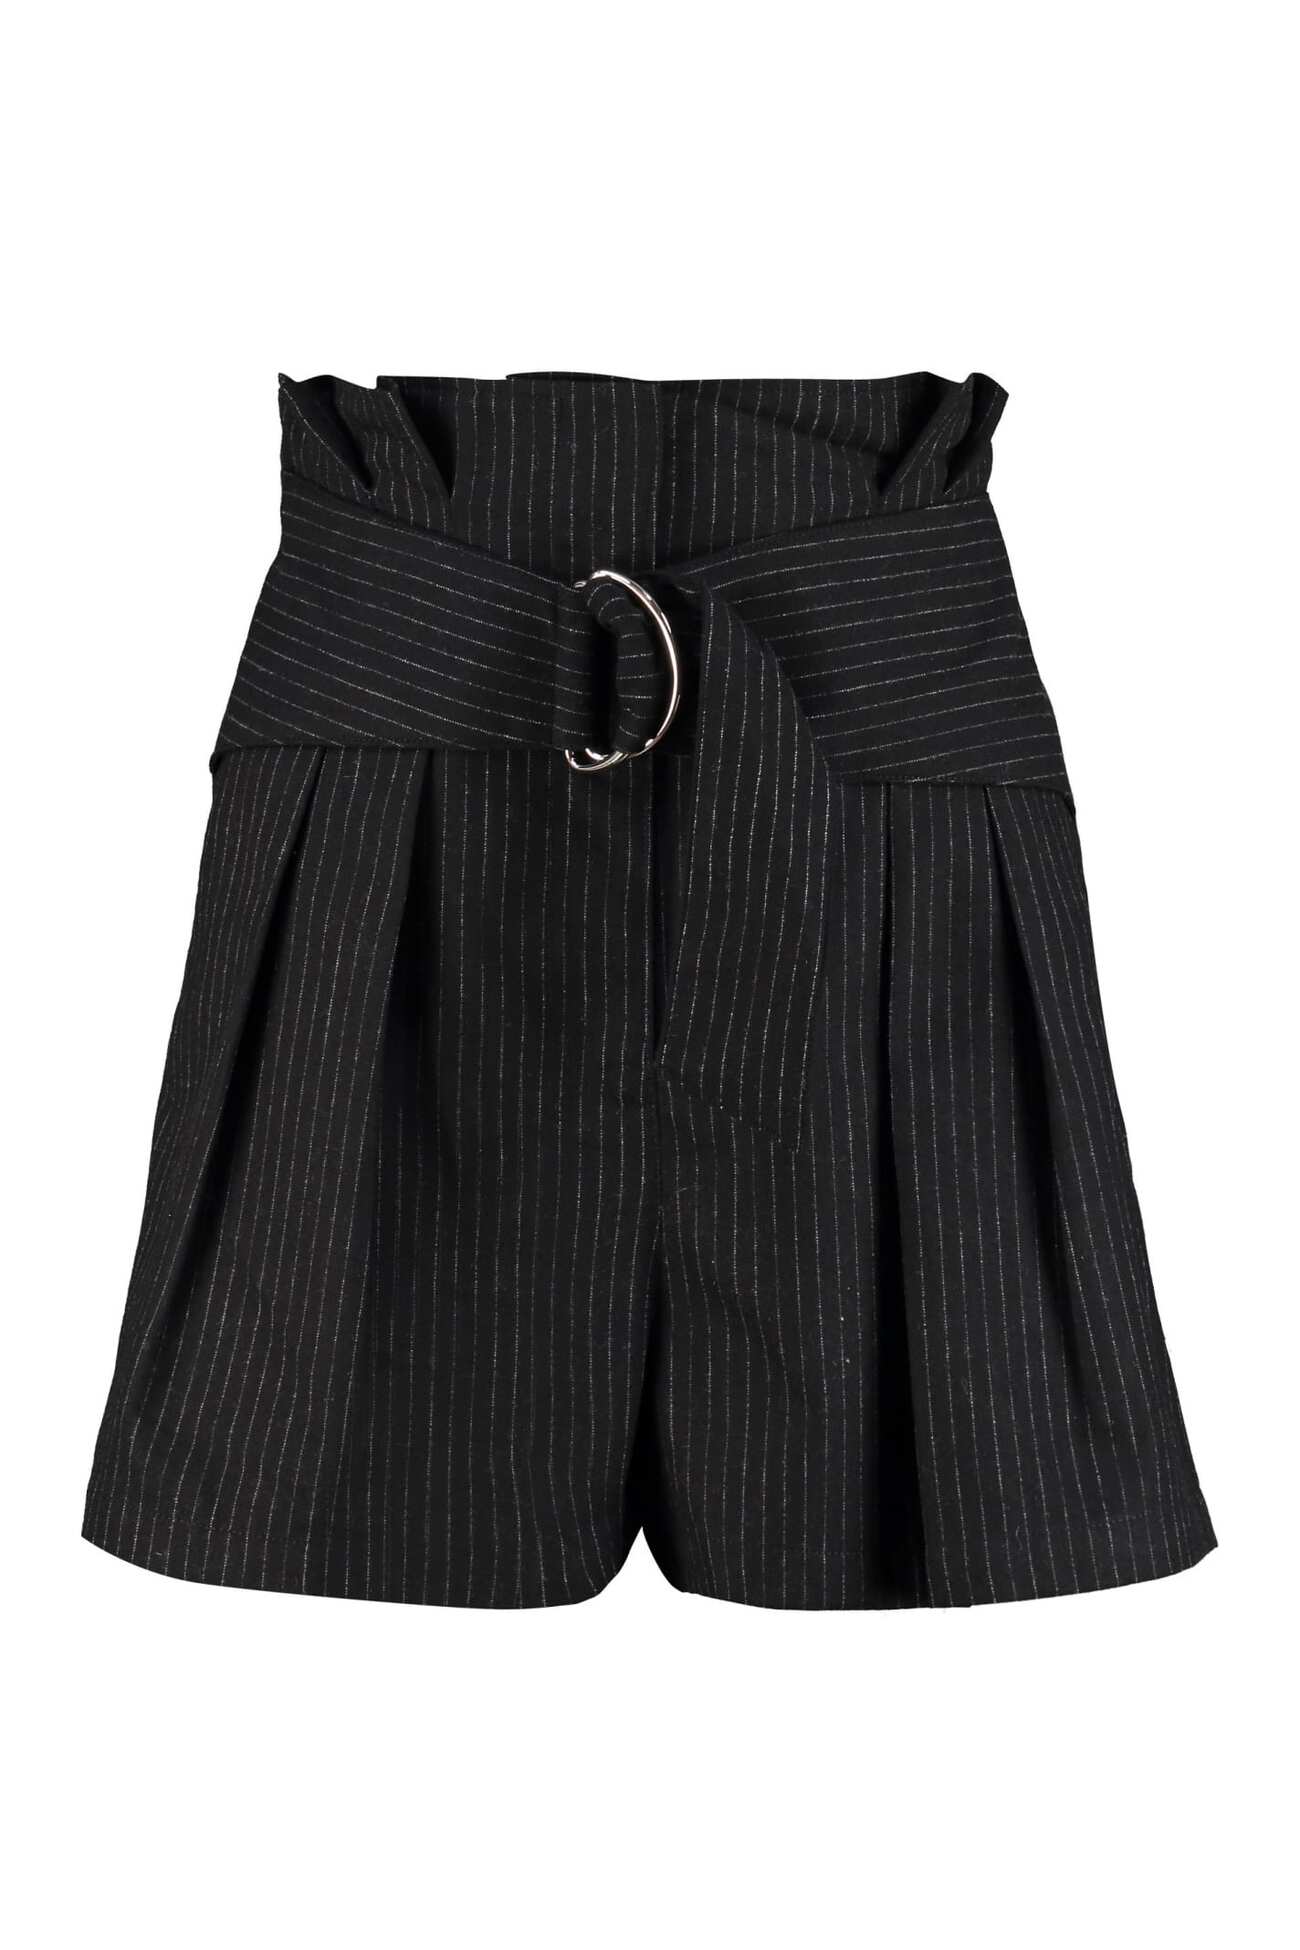 IRO Corsten High Waist Shorts in black